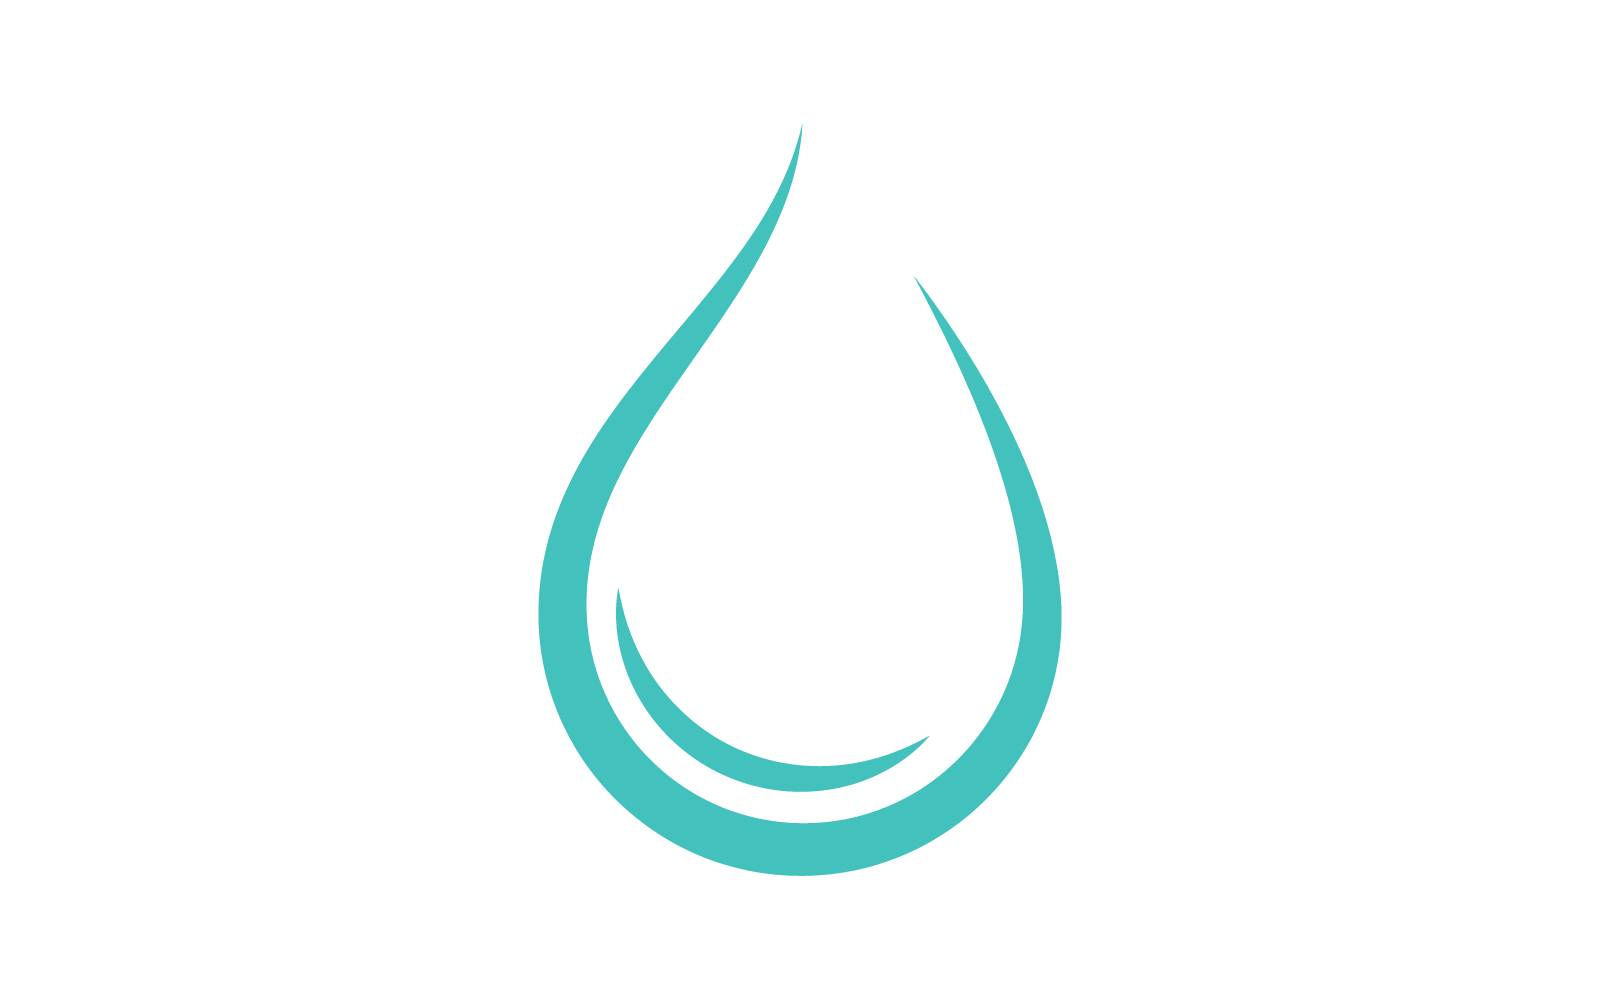 Water drop illustration logo flat design vector